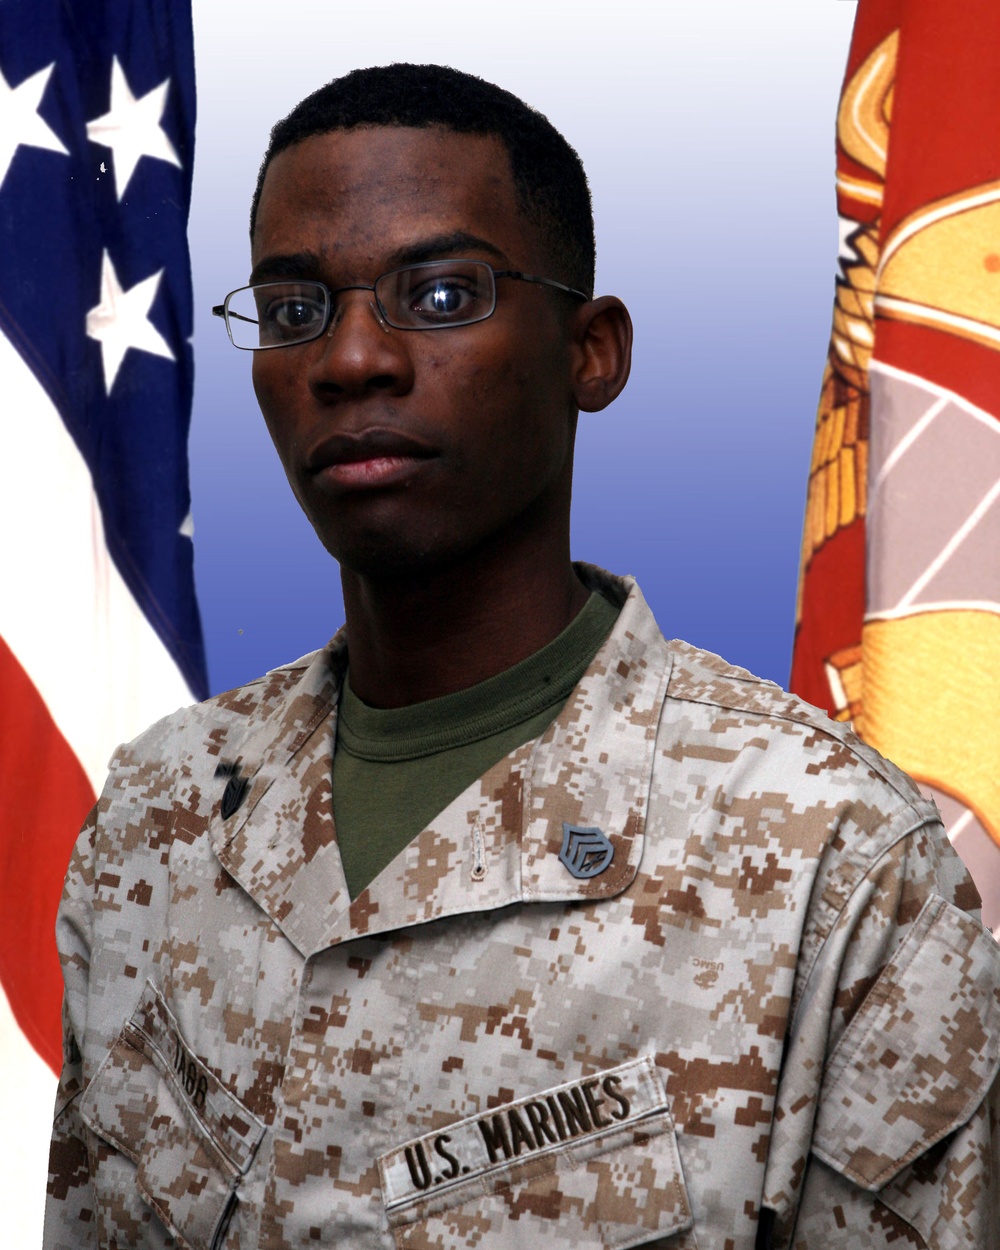 Durham, North Carolina native and Marine OIF veteran is promoted to next rank